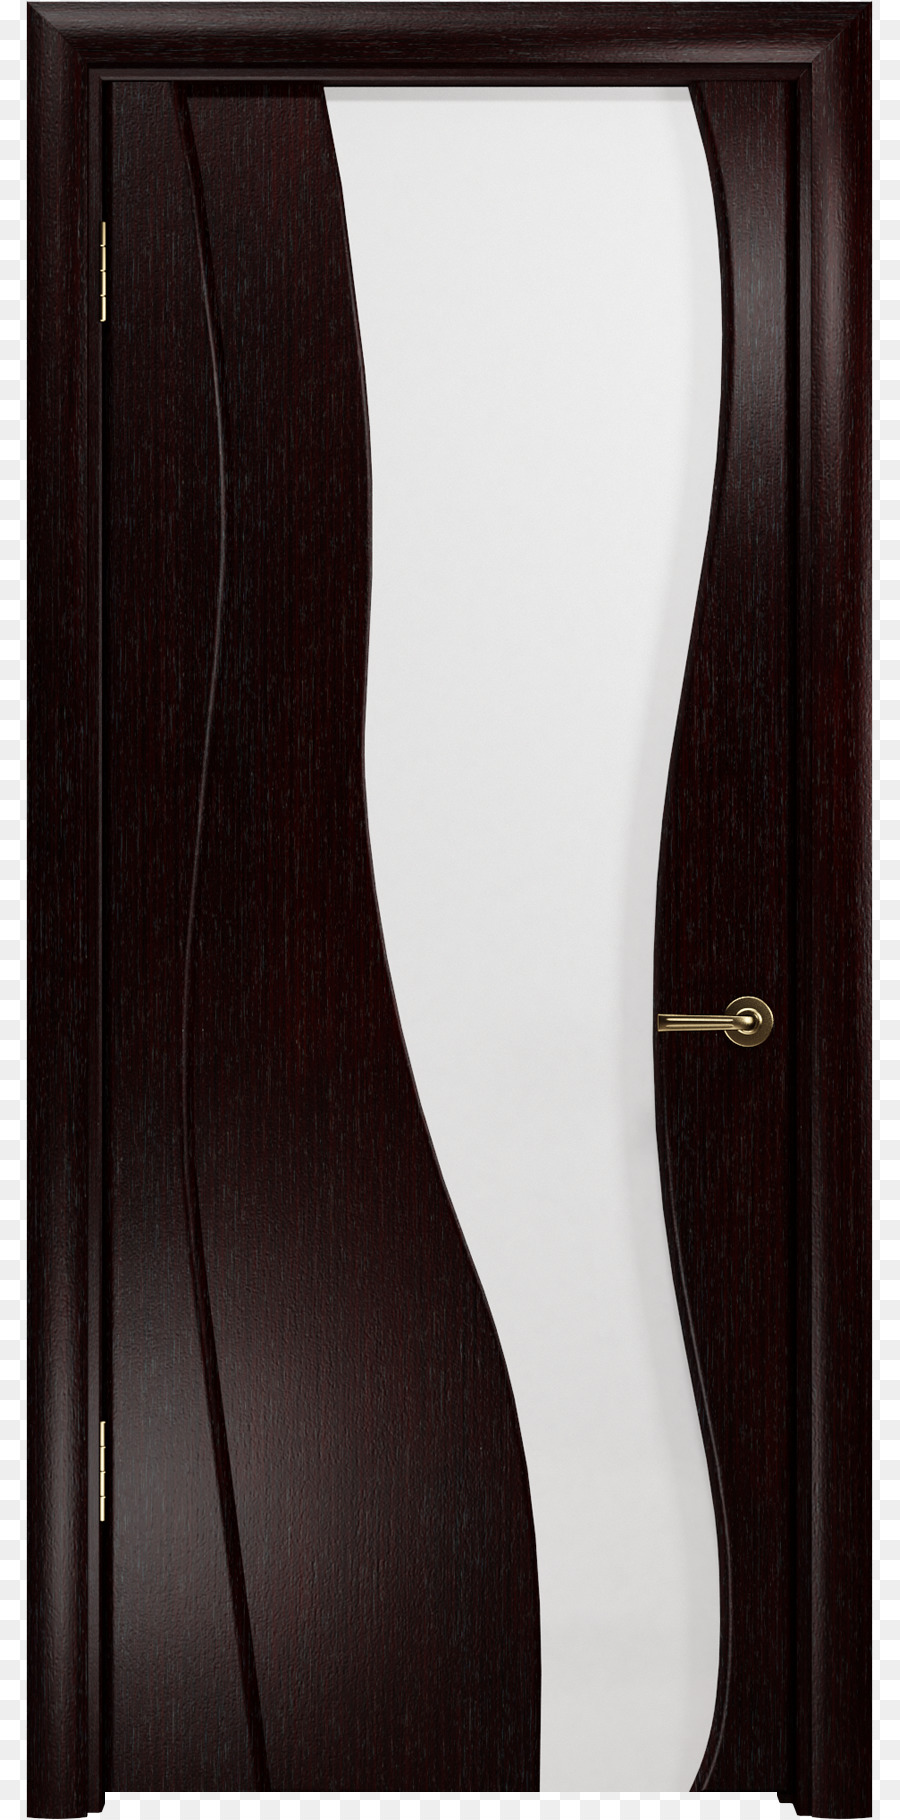 Porta blindata Art Deco Glass u0412u0435u043du0433u0435 - porta